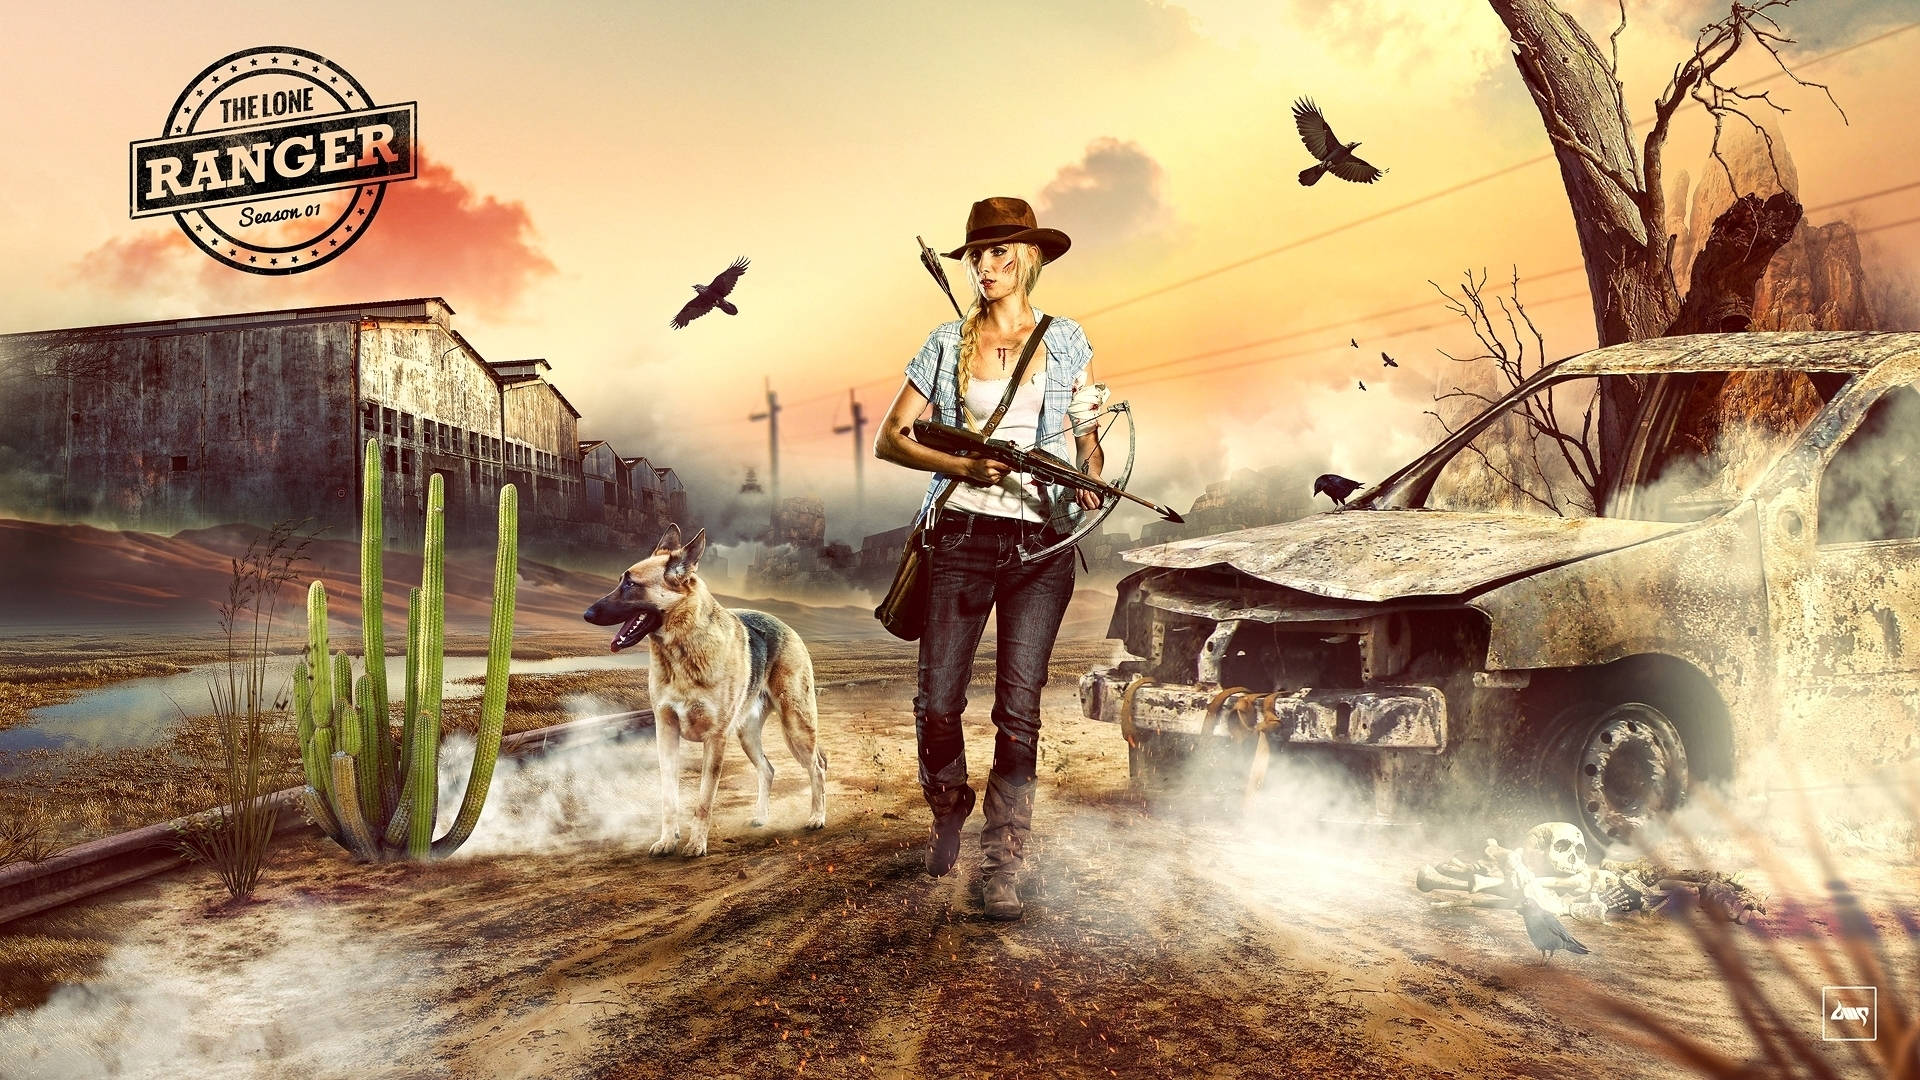 The Lone Ranger Season 01 Wallpaper